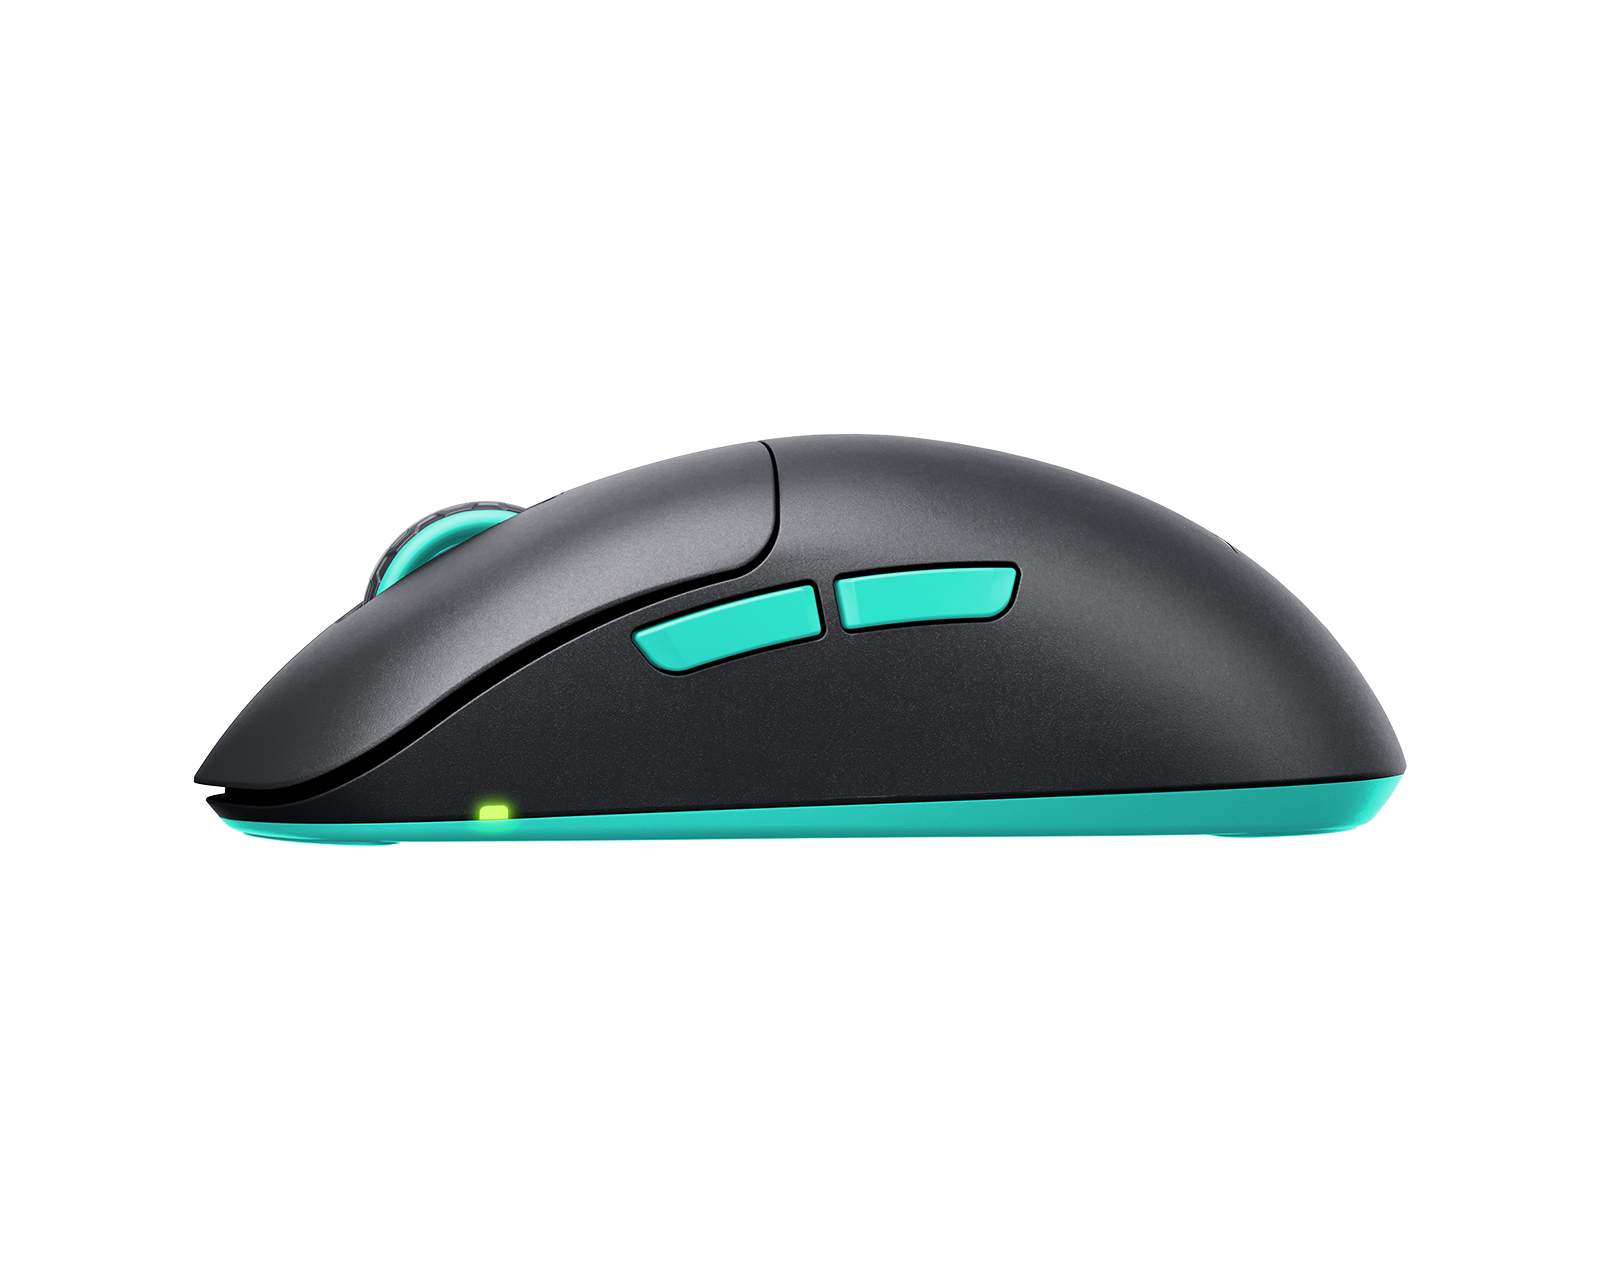 Xtrfy M8 Wireless Ultra-Light Gaming Mouse - Black